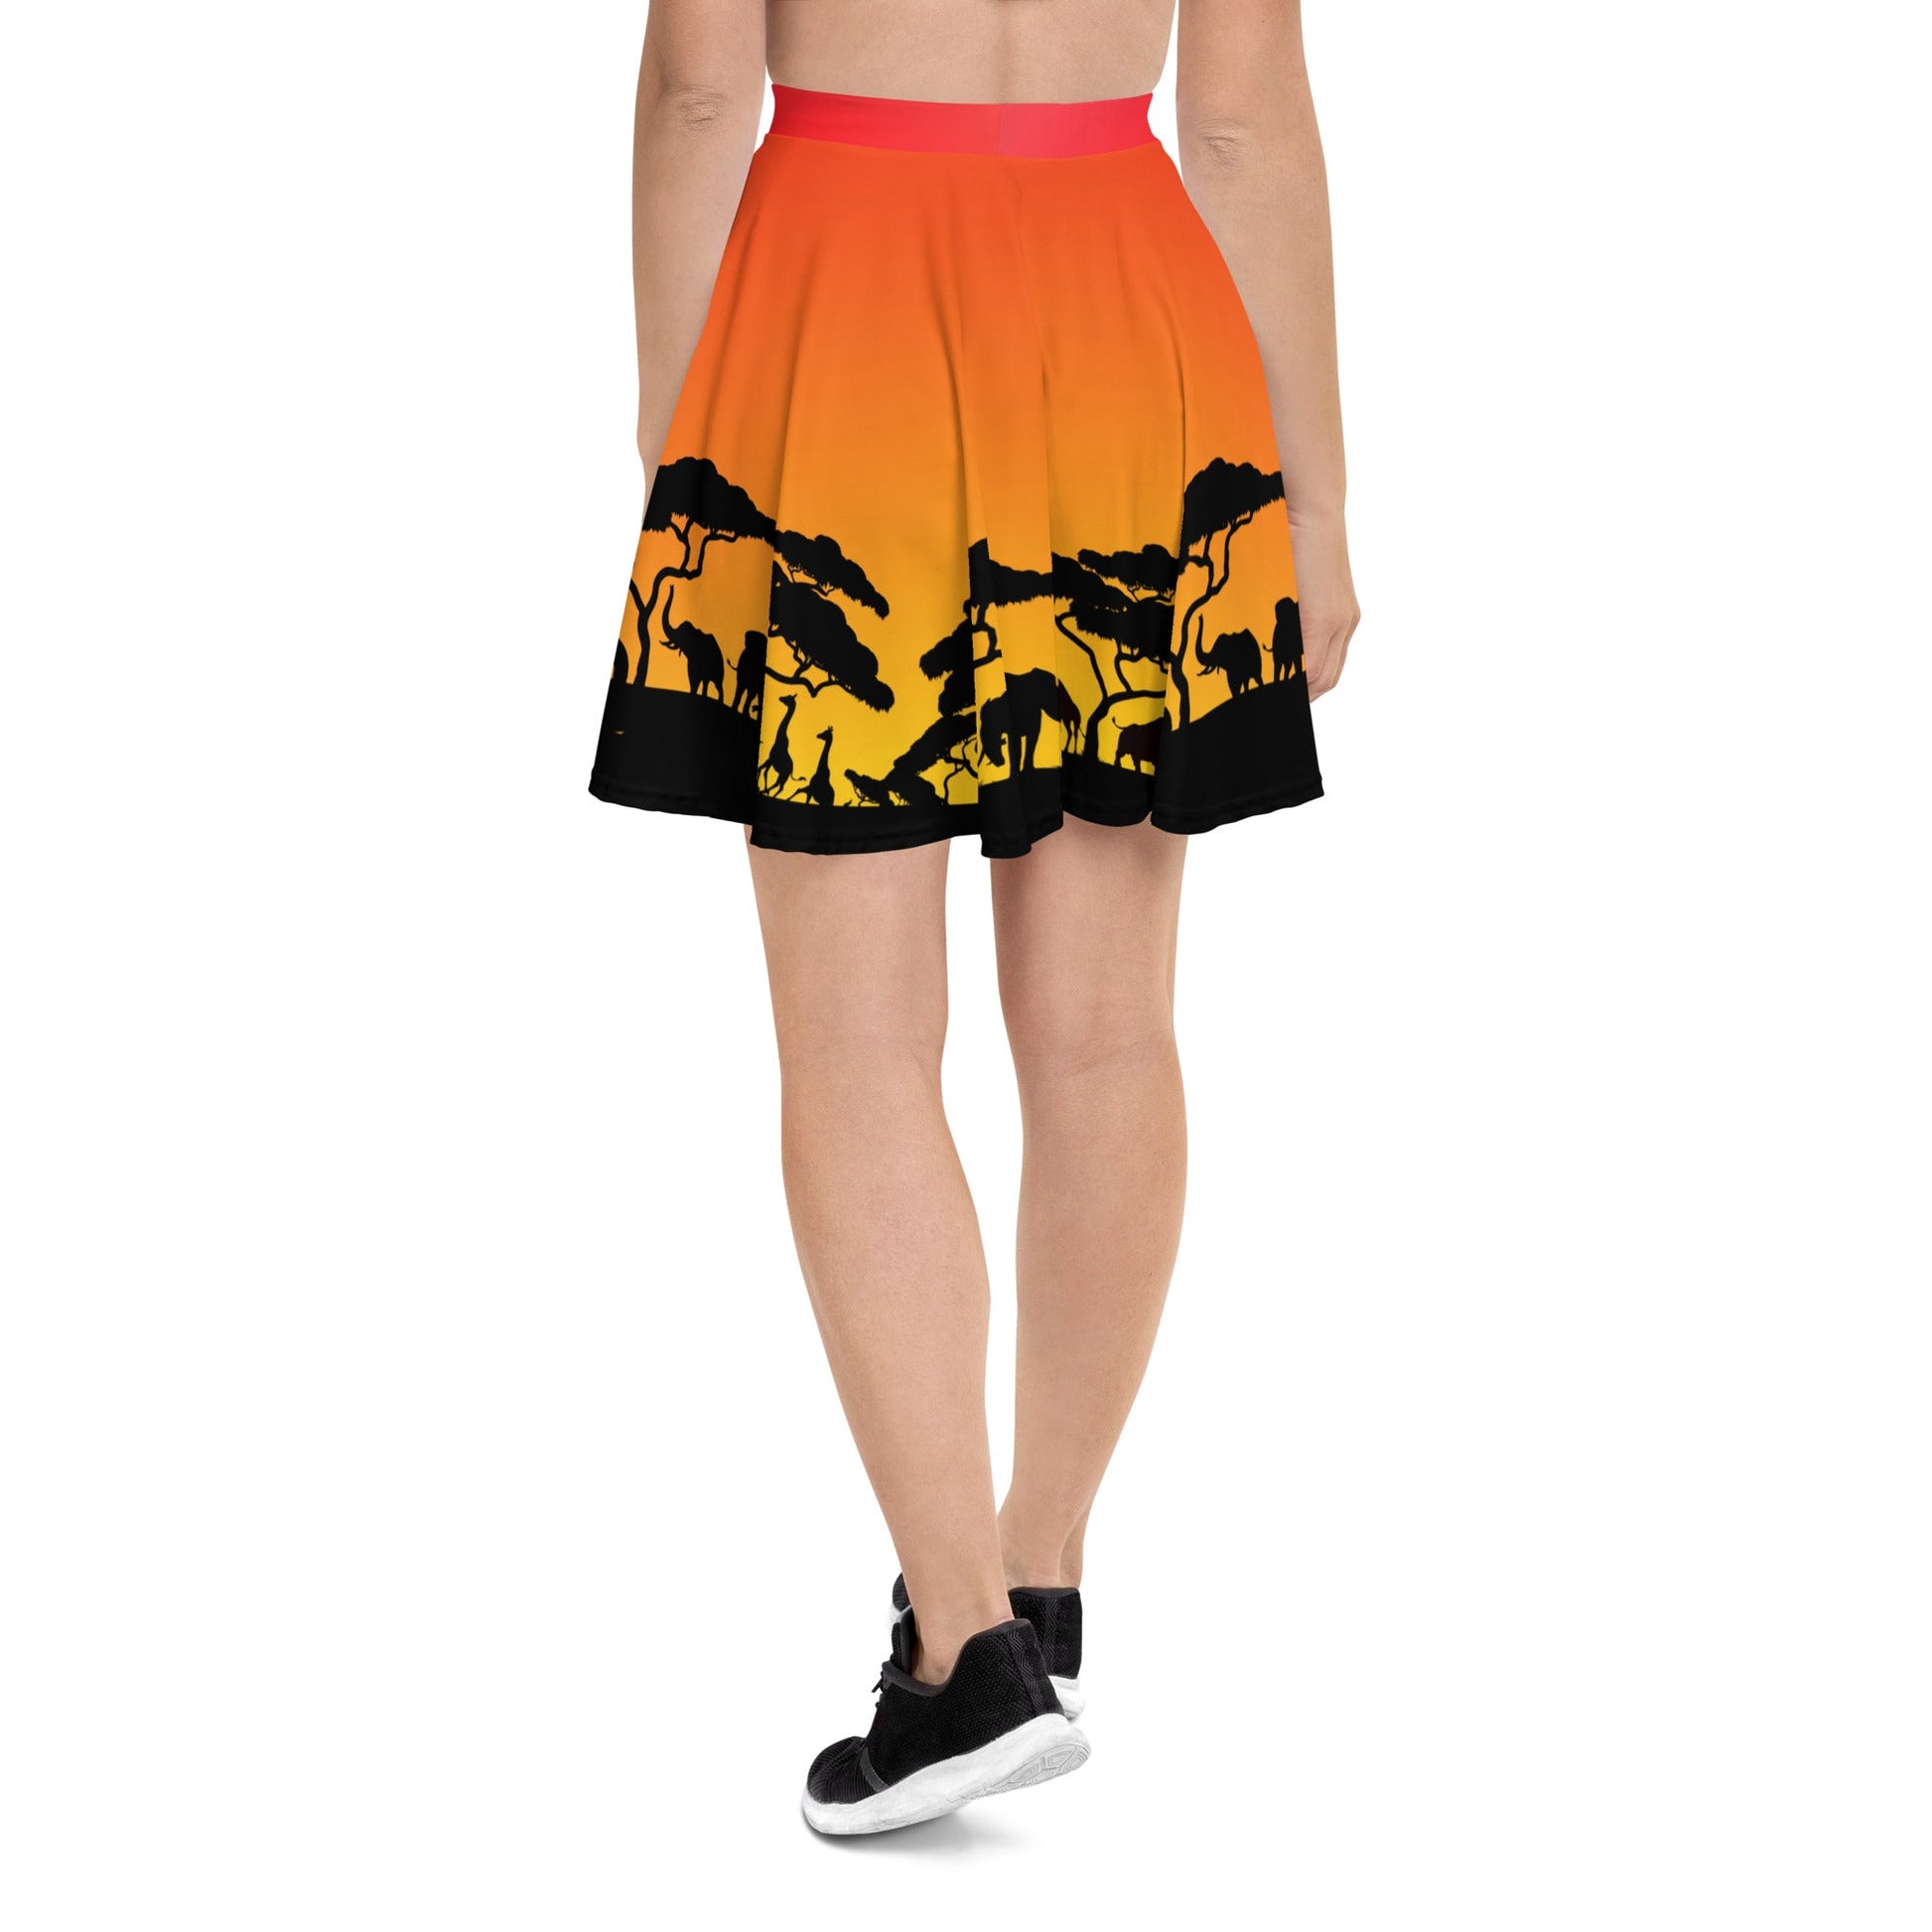 Circle of Life Skater Skirt active wearanimal kingdomdisney bounding#tag4##tag5##tag6#